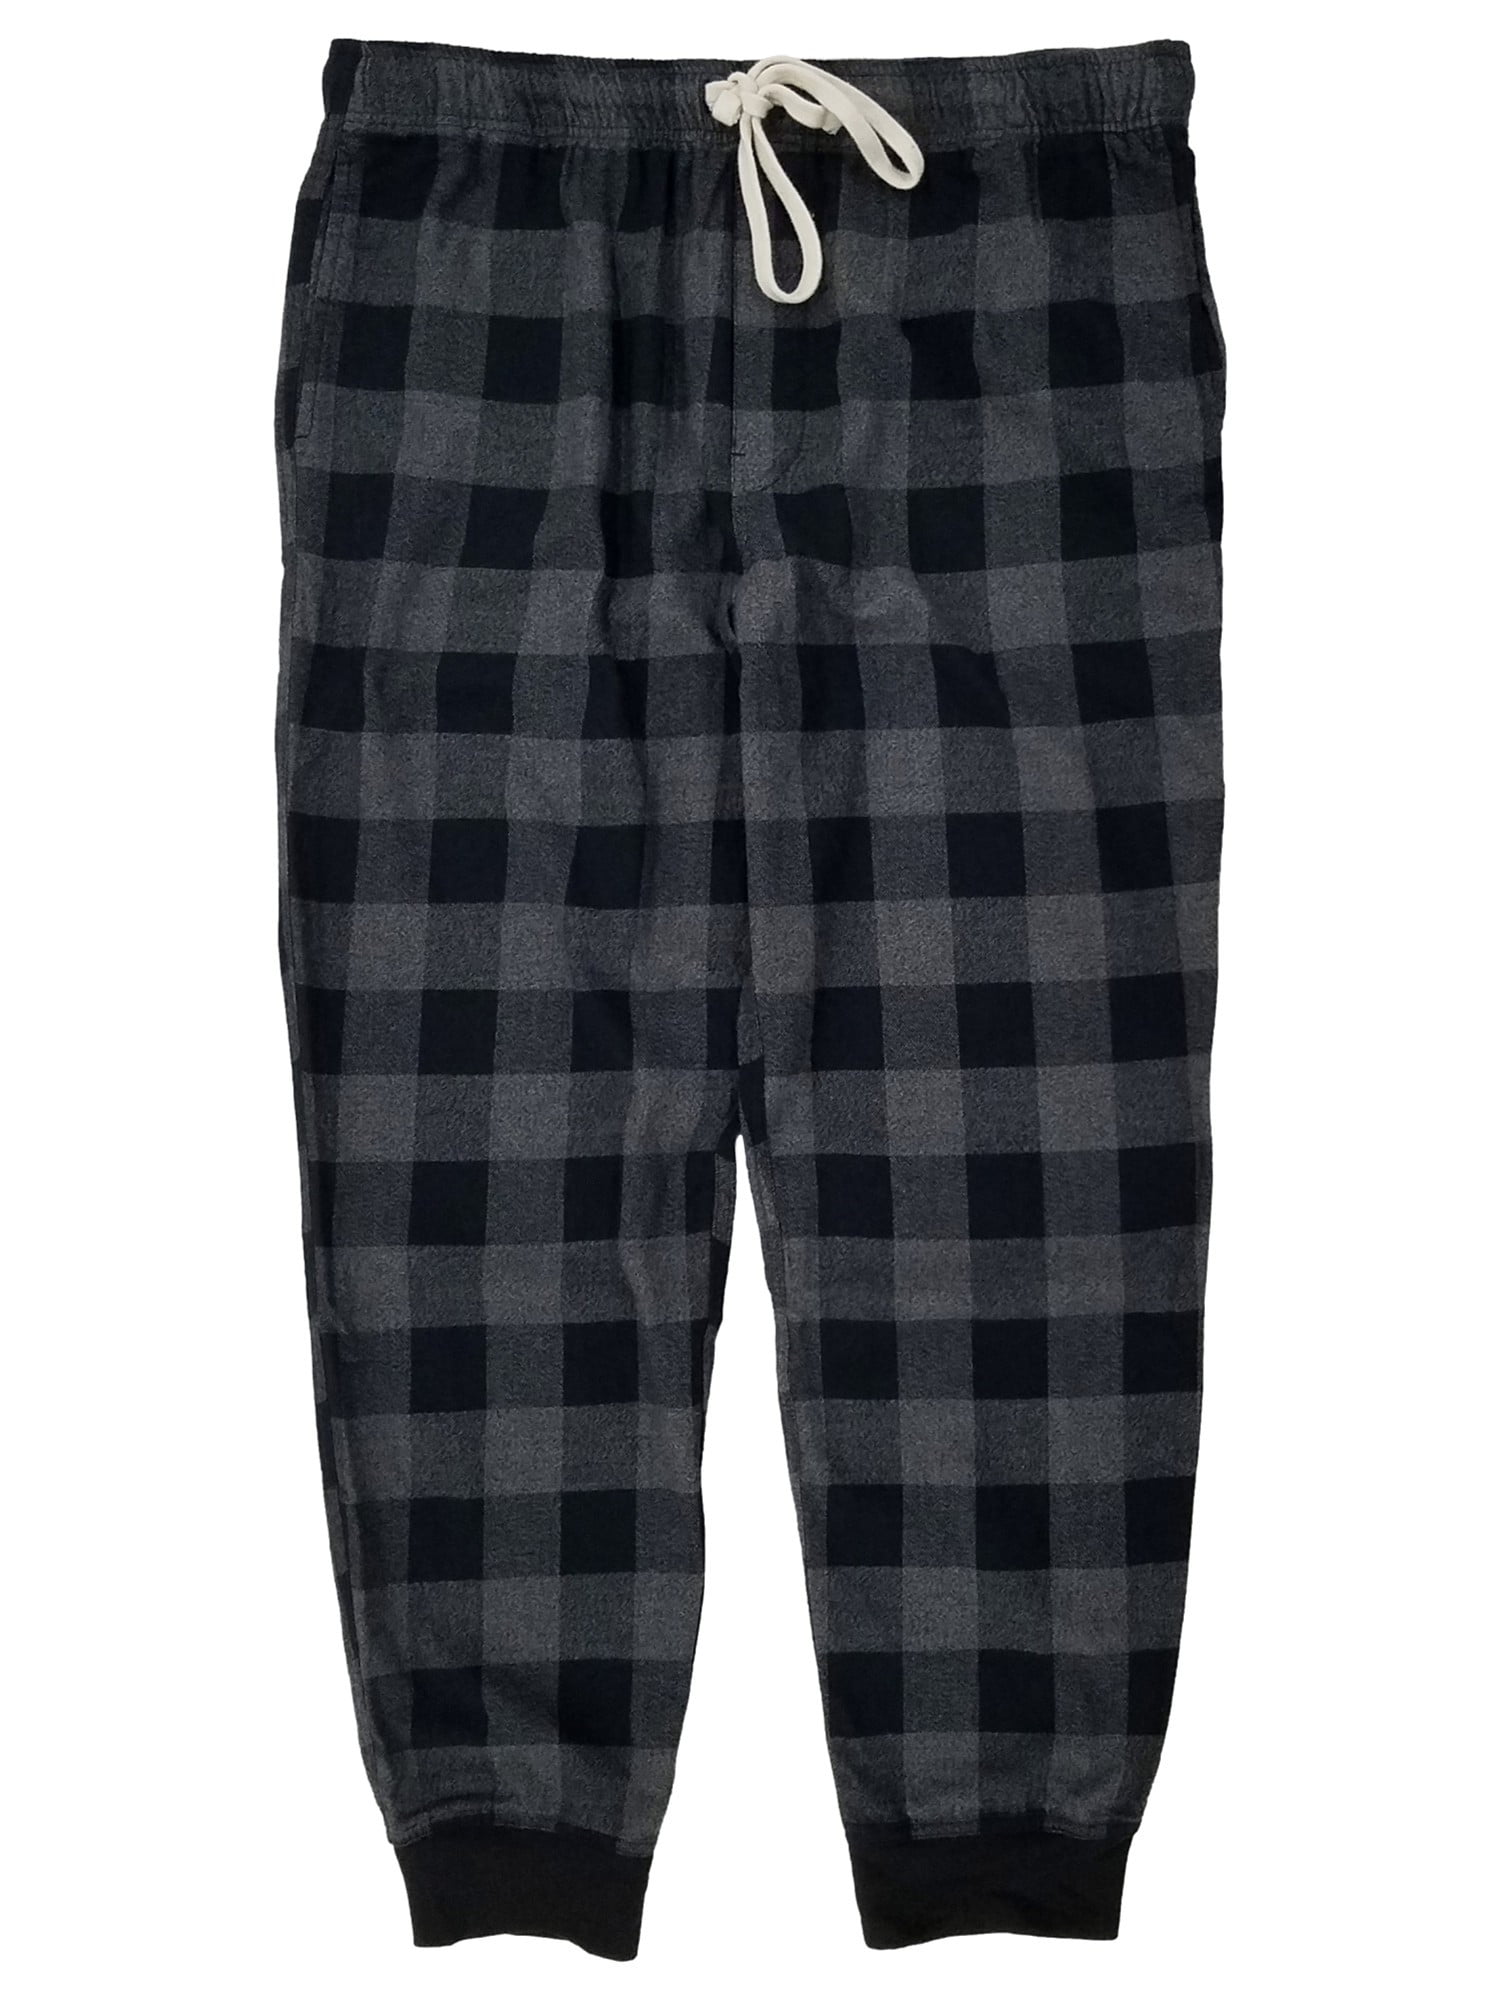 Yuiboo Buffalo Plaid Scotland Gray Pajamas Pants For Men Flannel